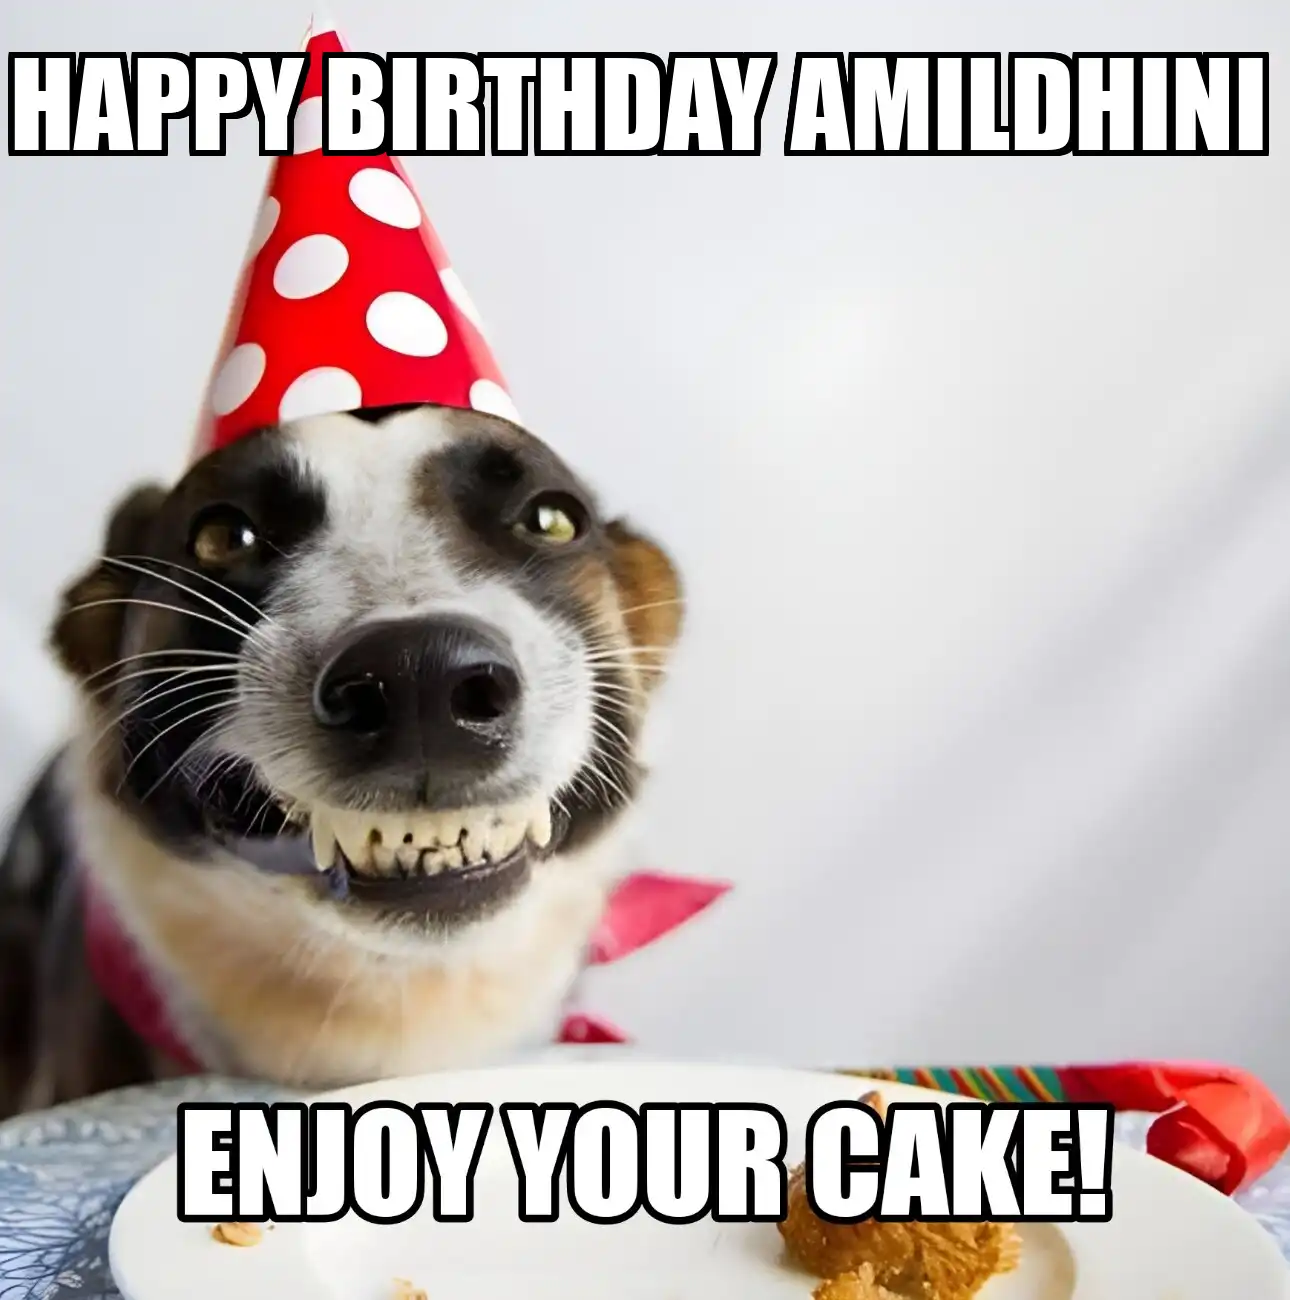 Happy Birthday Amildhini Enjoy Your Cake Dog Meme